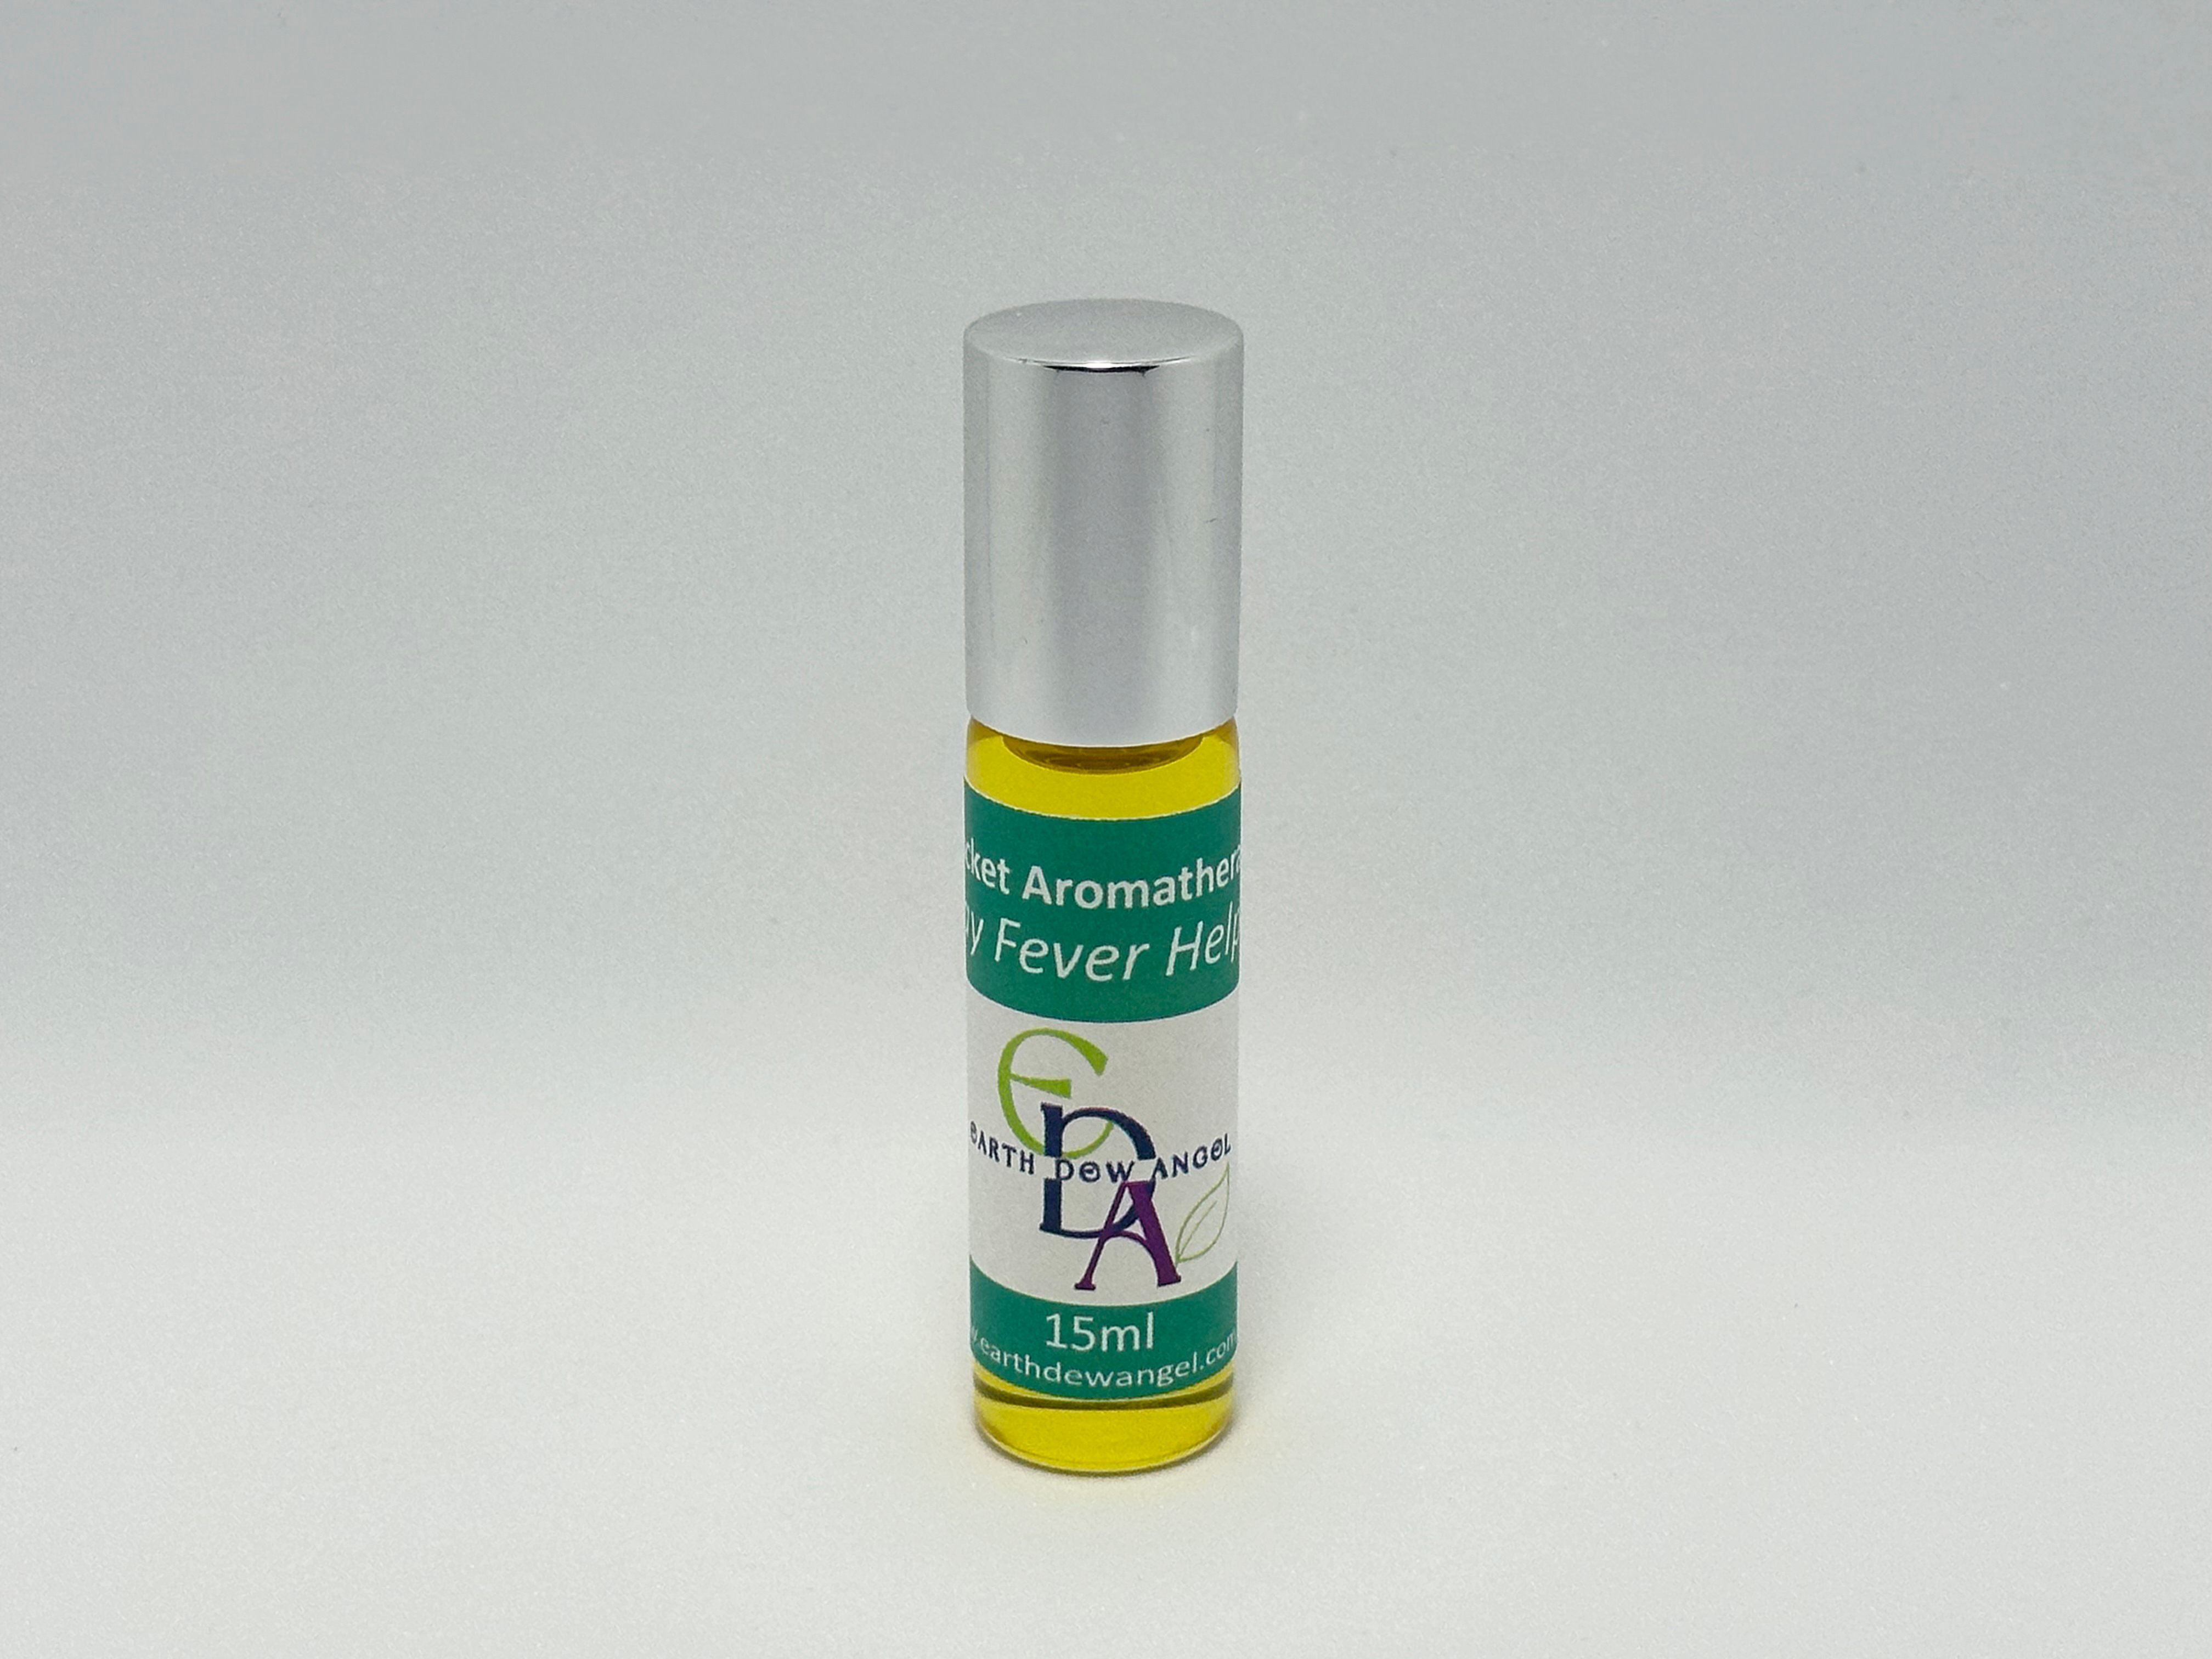 Hay Fever Helper Pocket Aromatherapy